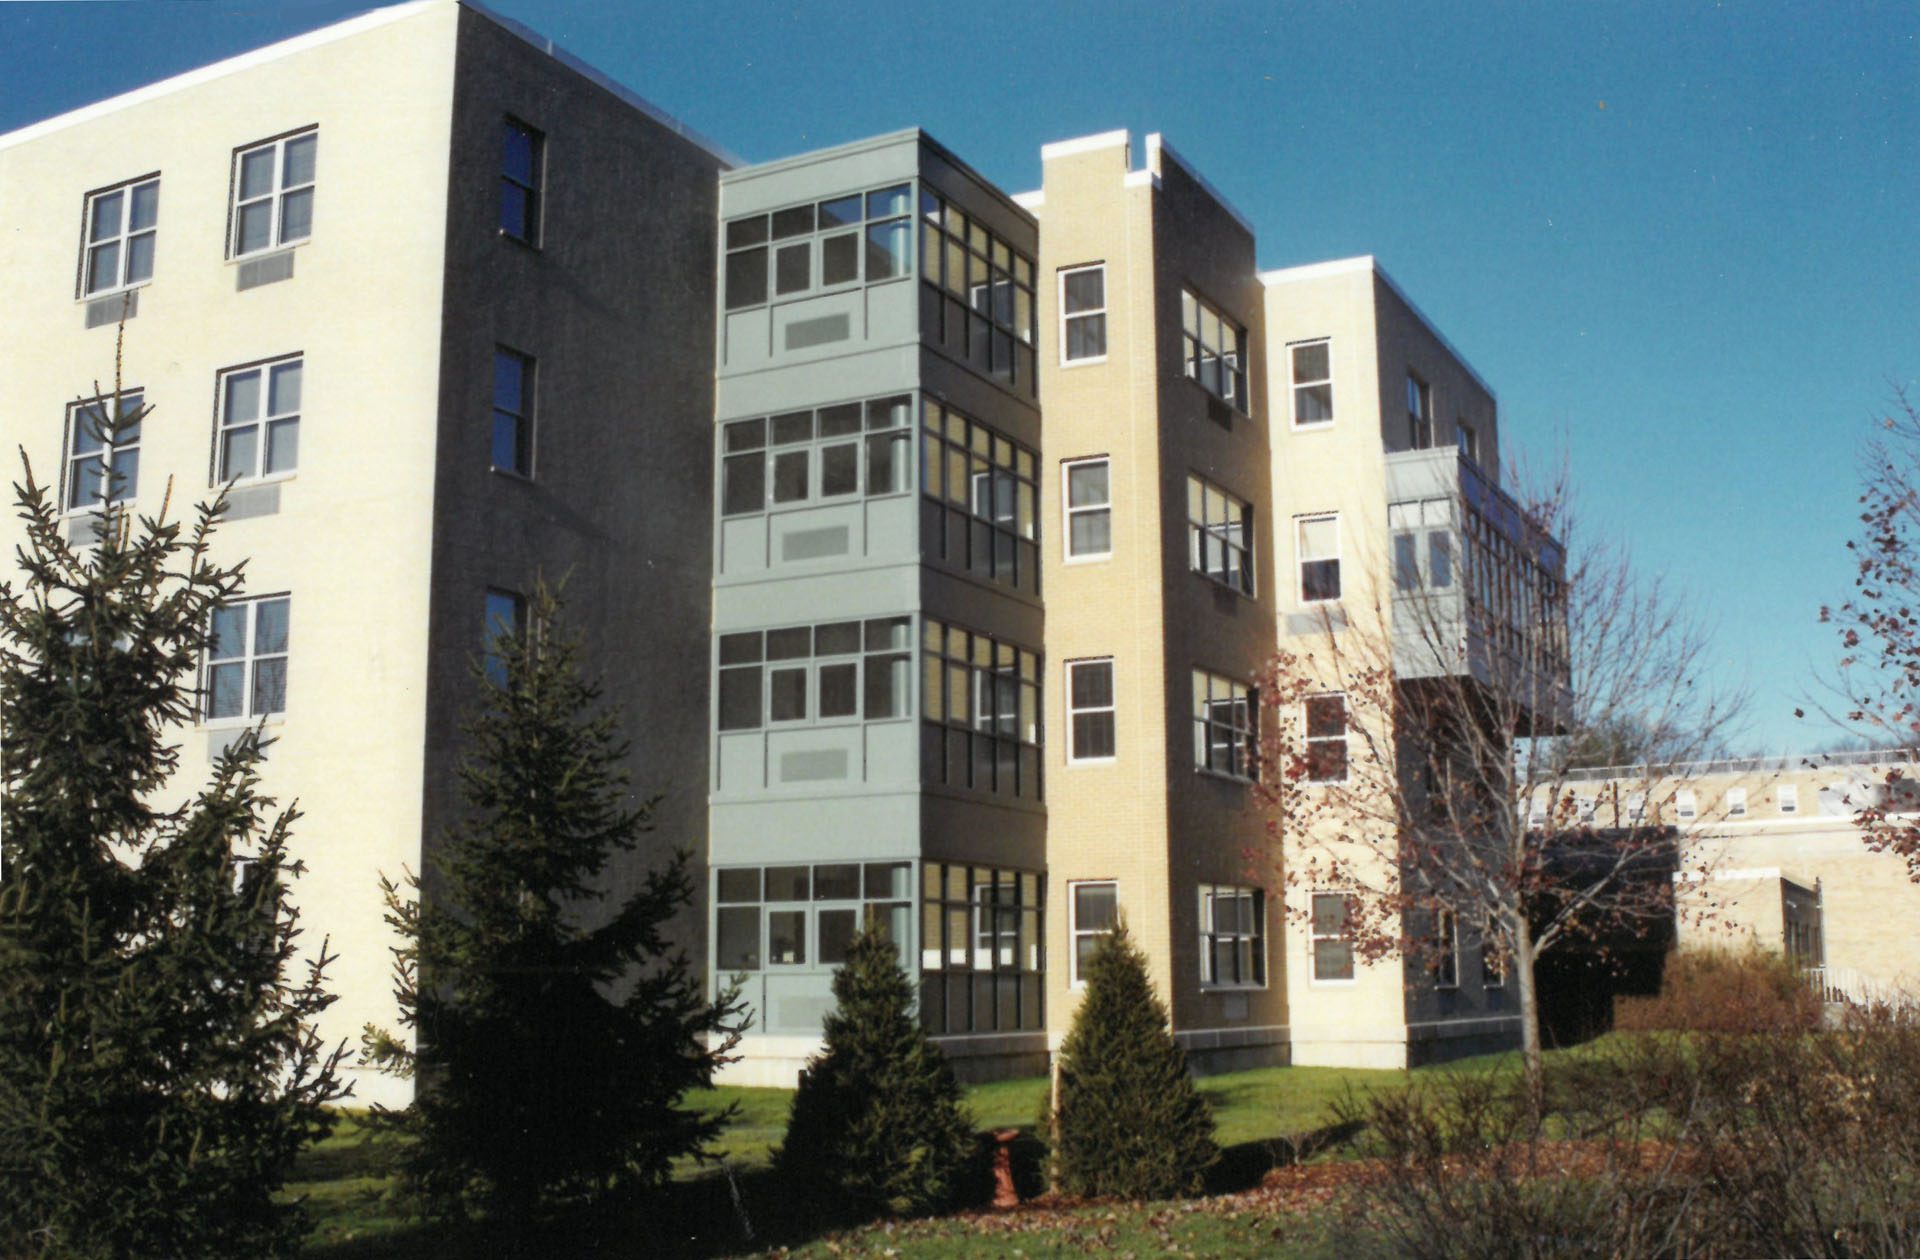 2007 – St. Agnes Residence, Sparkill, NY